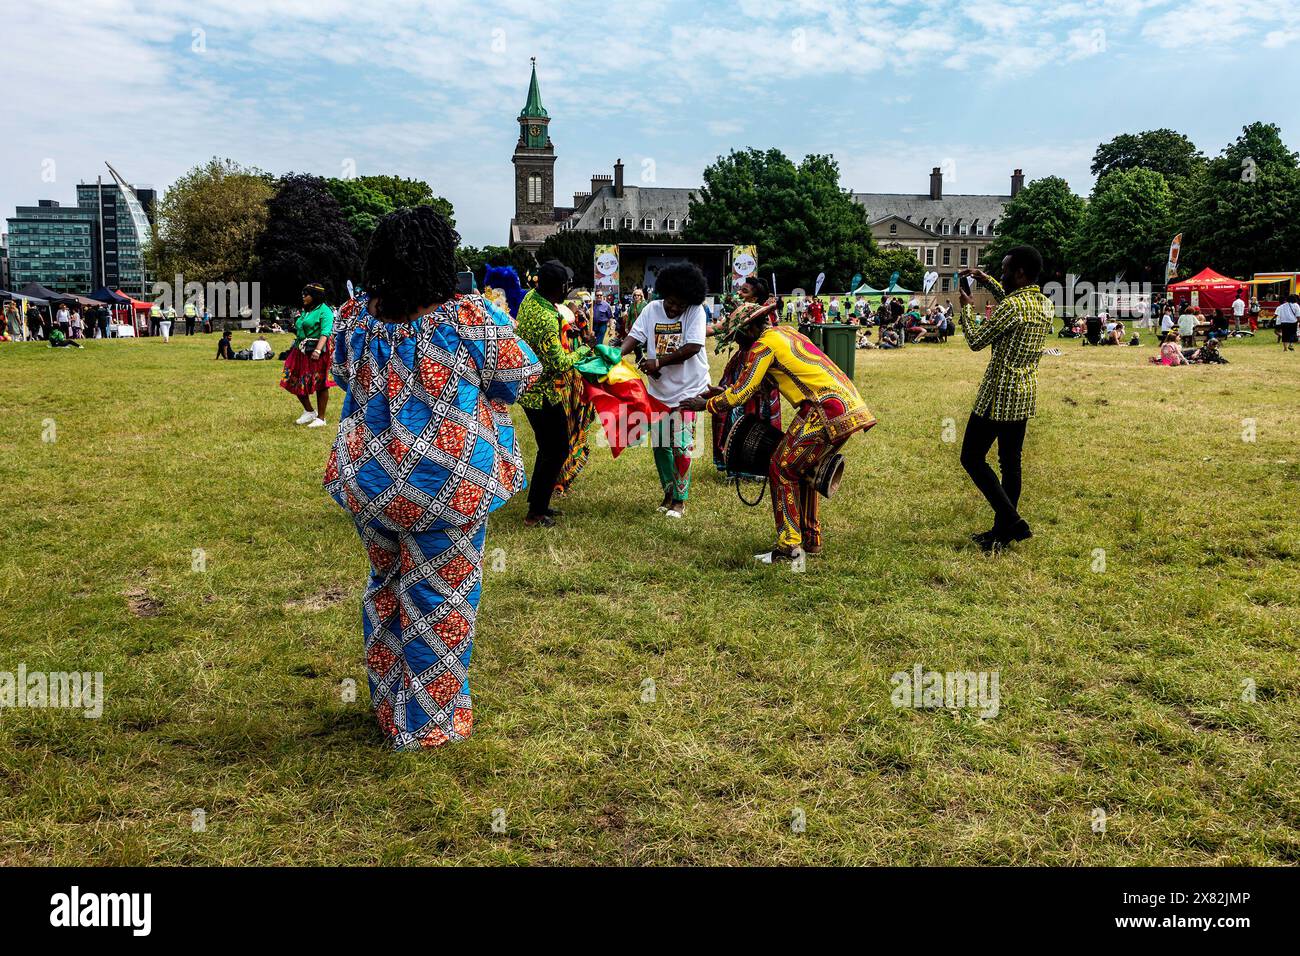 Persone che amano l'Africa Day al festival Afica Day nel Royal Hospital Kilmainham, Dublino, Irlanda. Foto Stock